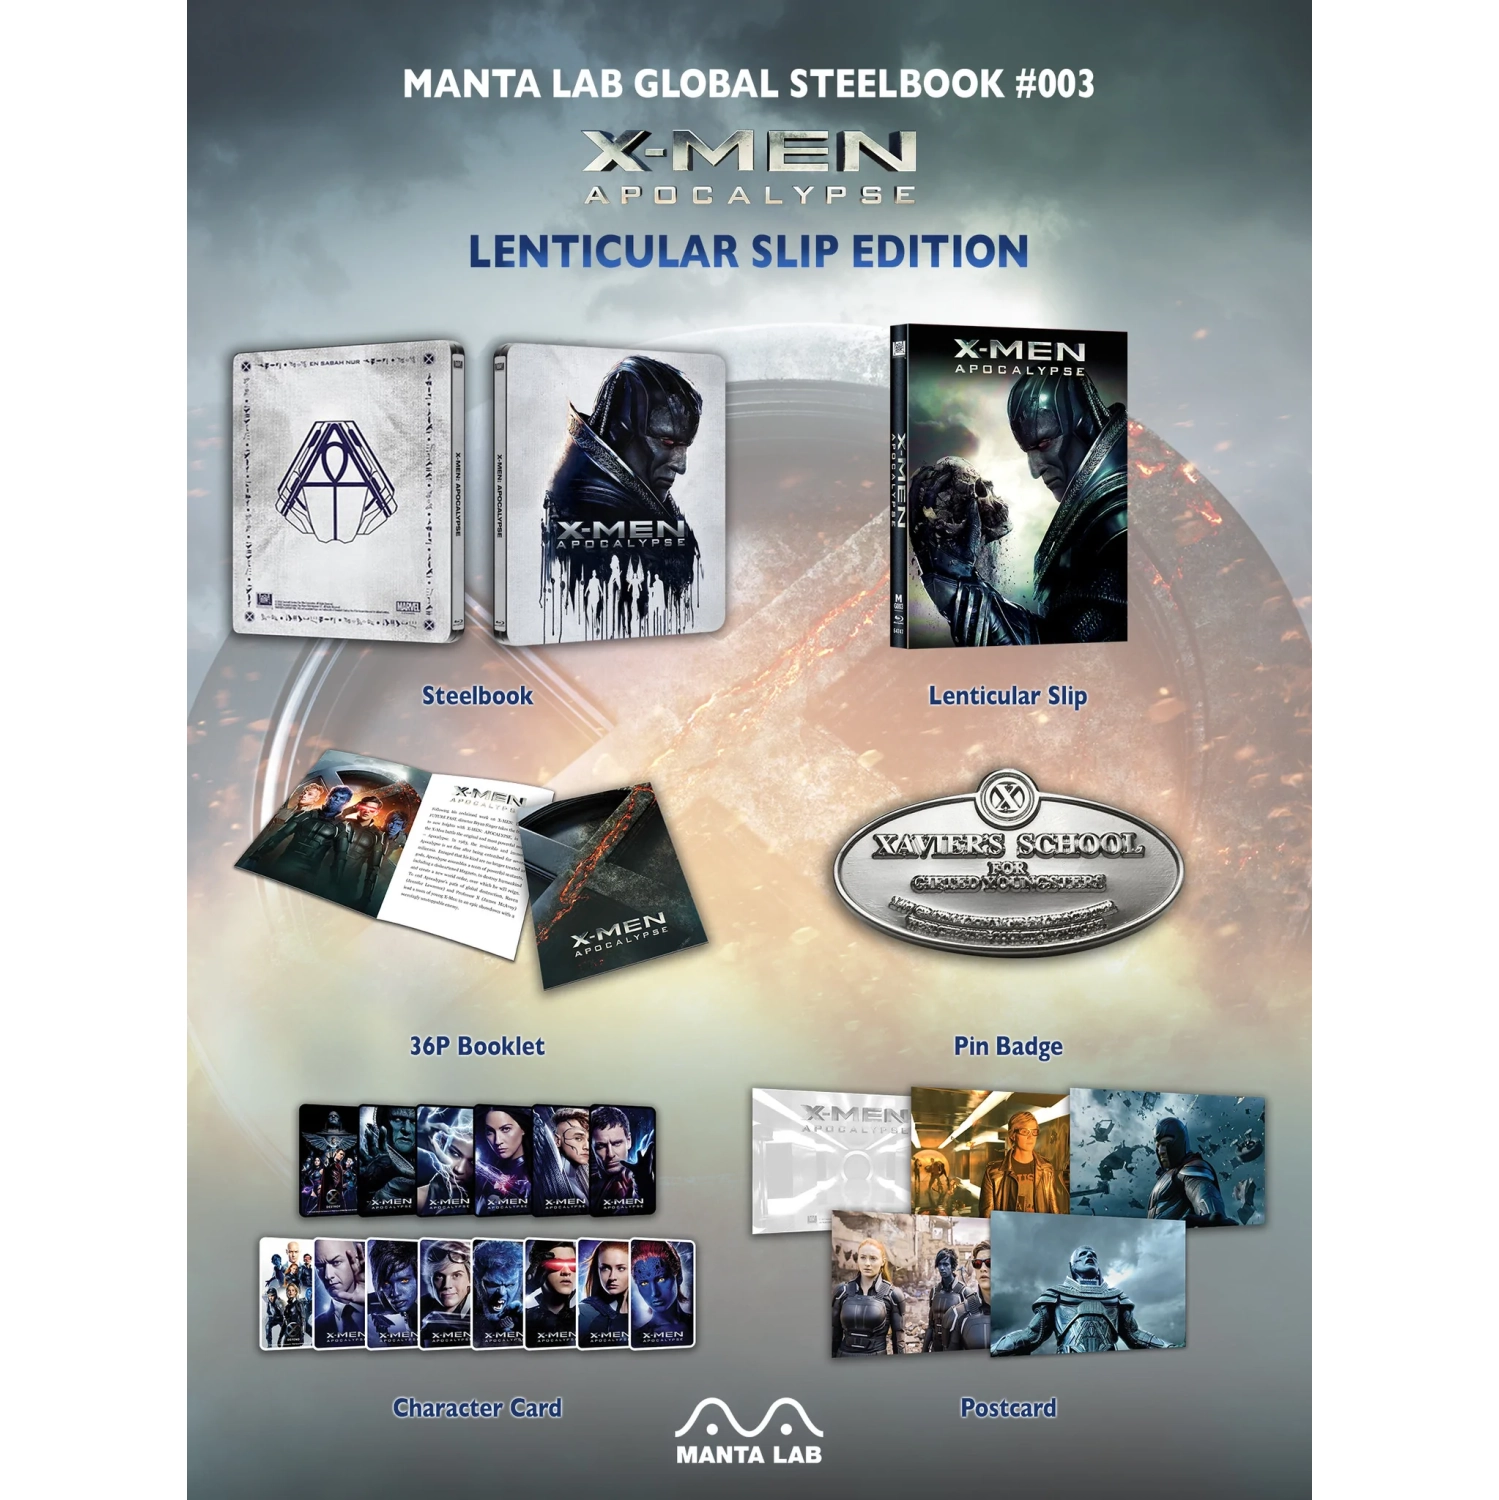 X-MEN: Apocalypse Steelbook [Manta Lab] [Lenticular Slip Version] [Blu-ray]